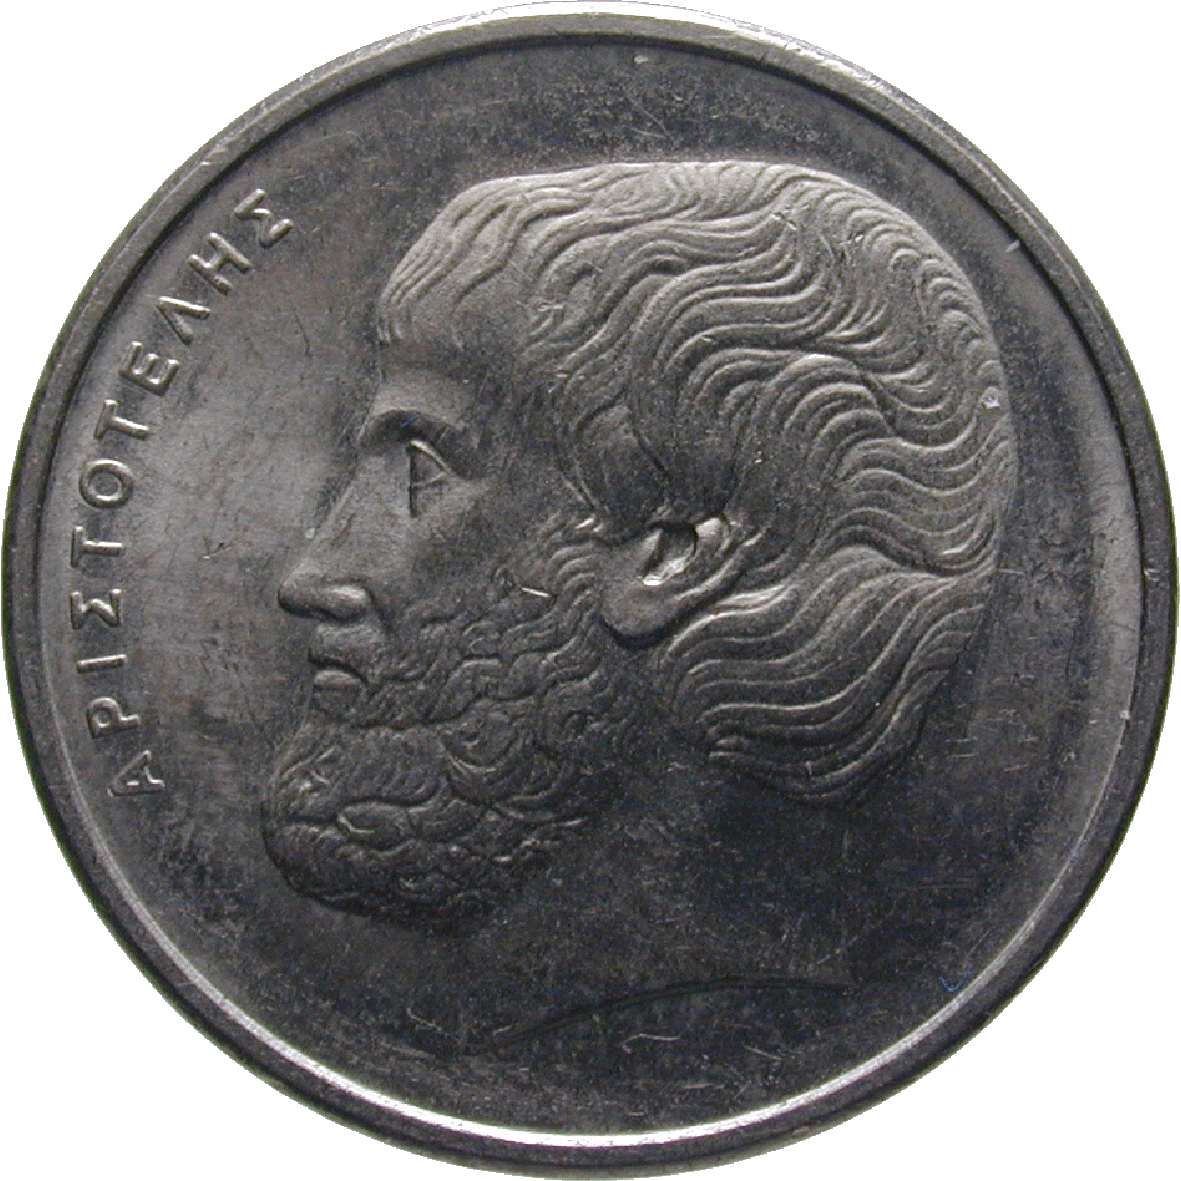 Republic of Greece, 5 Drachmai 1976 (reverse)